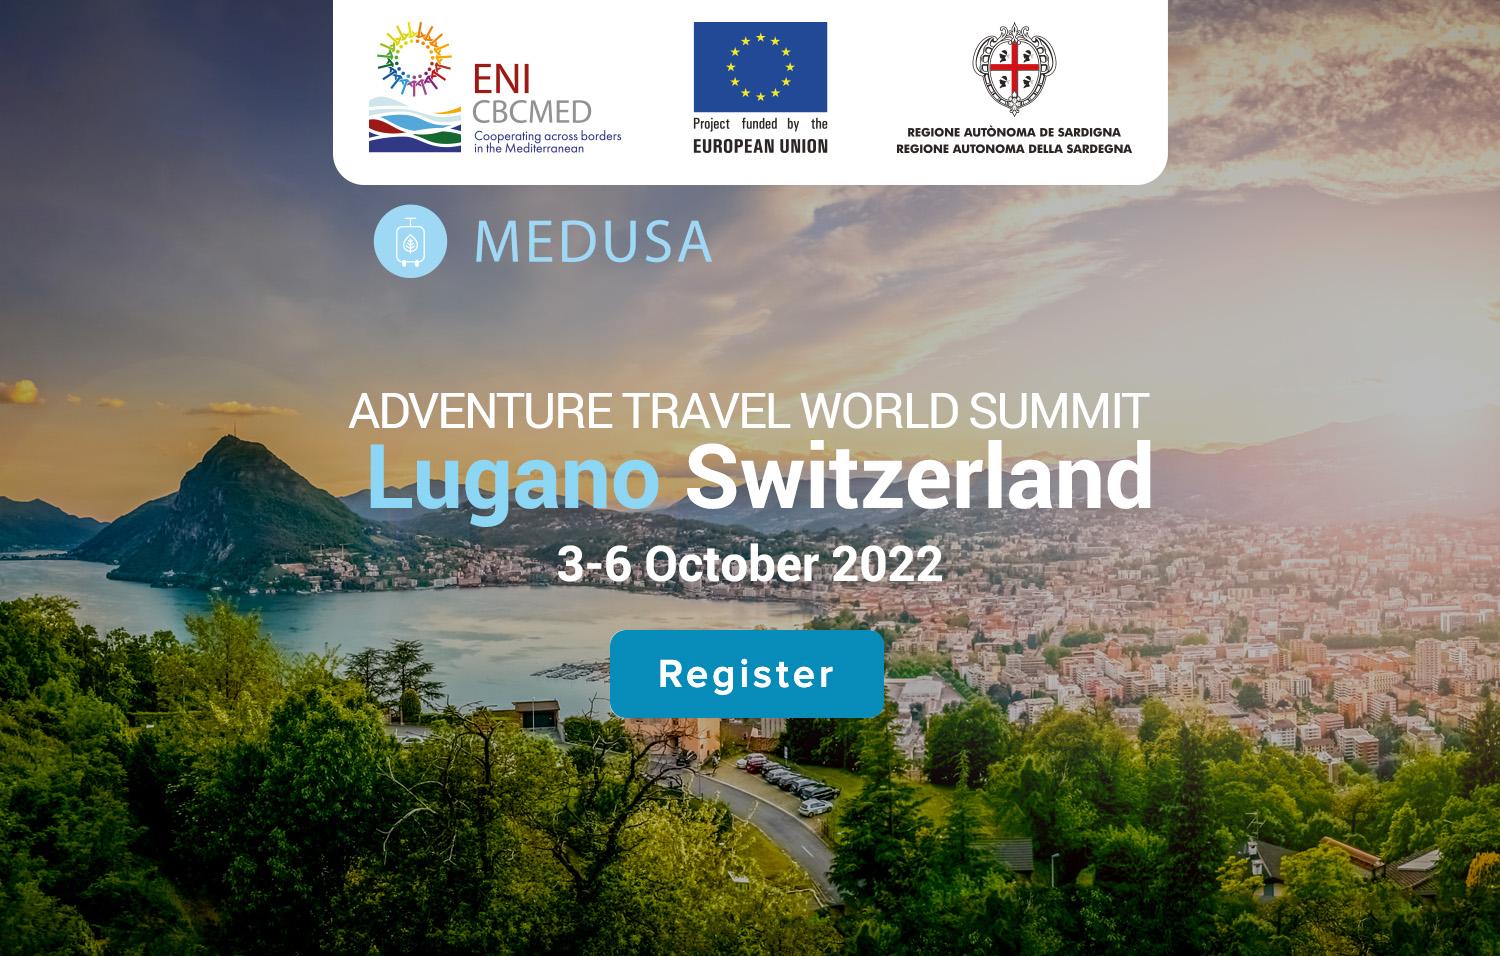 MEDUSA Invitation to apply for the Adventure Travel World Summit EU